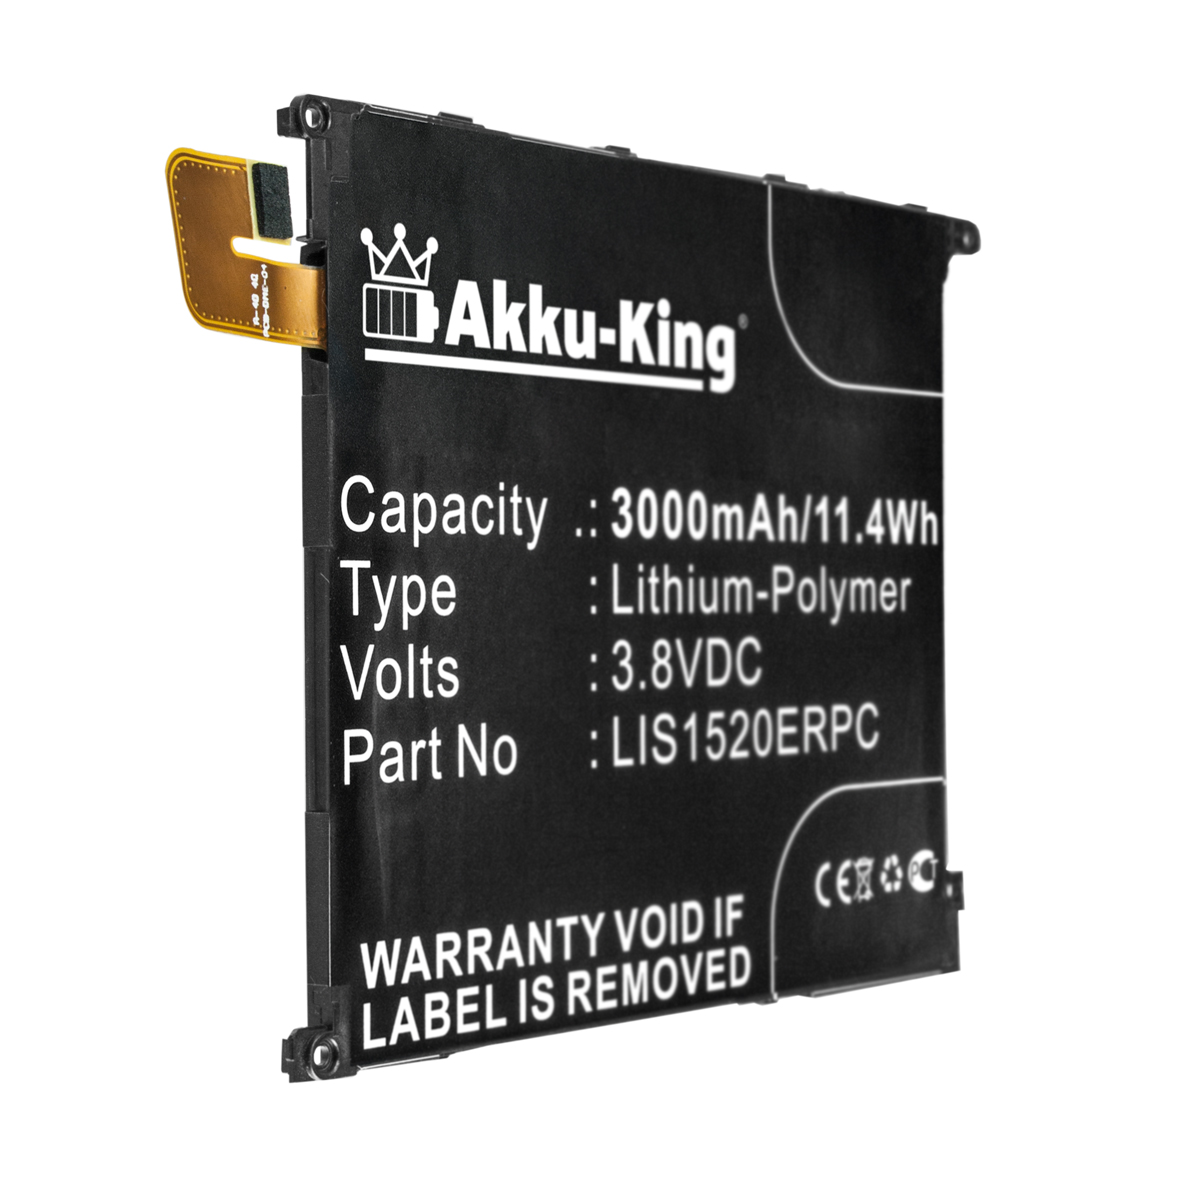 AKKU-KING Akku kompatibel mit Sony LIS1520ERPC 3.8 3000mAh Volt, Li-Polymer Handy-Akku